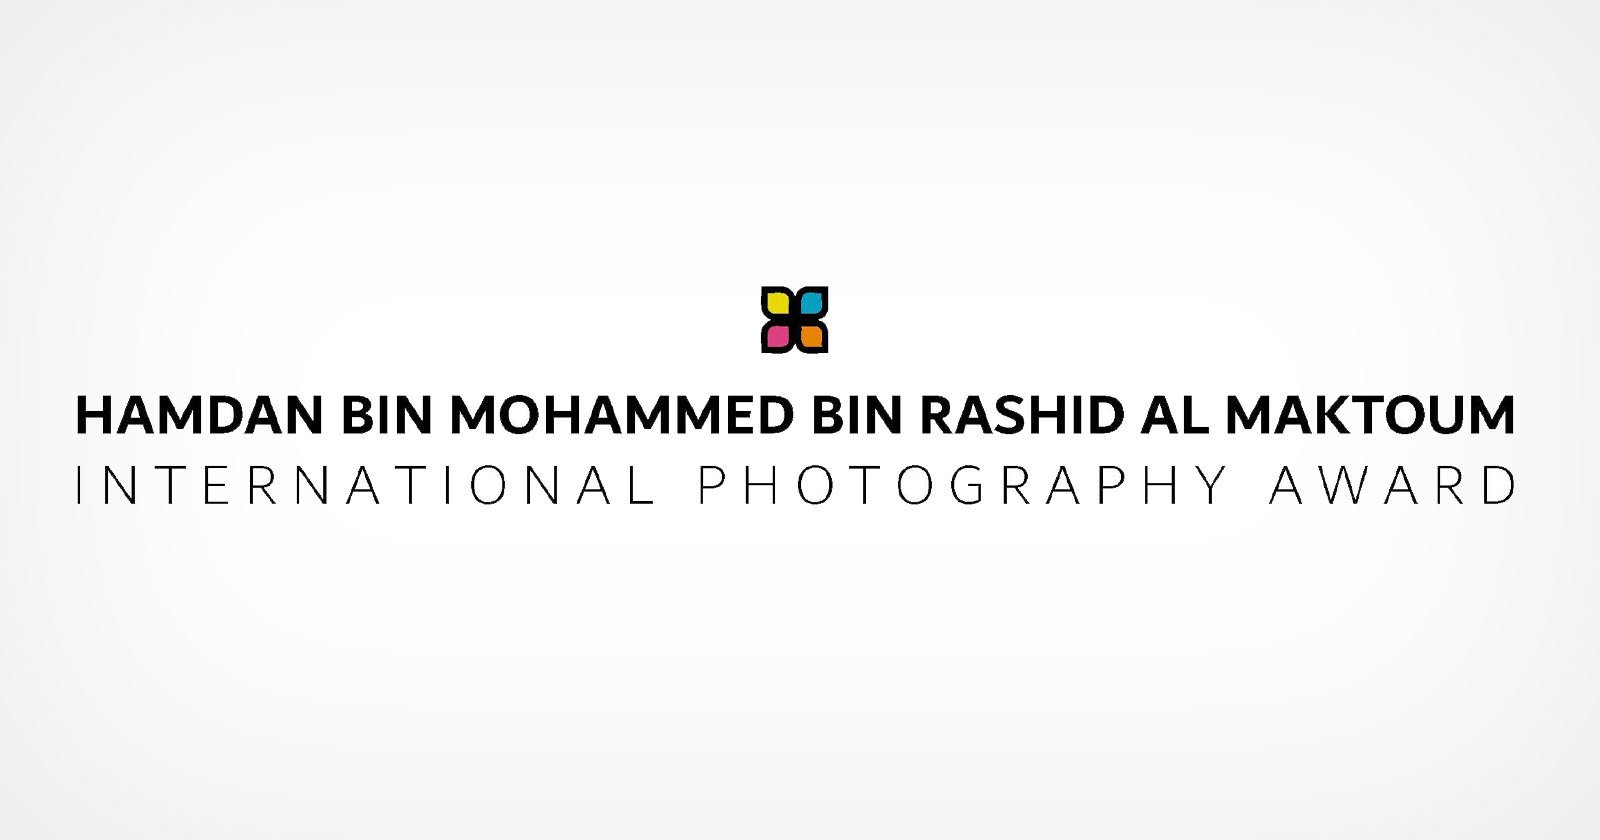 Logo of the Hamdan Bin Mohammed Bin Rashid al Maktoum International Photography Award, featuring stylized text and a colorful, geometric icon above the text.